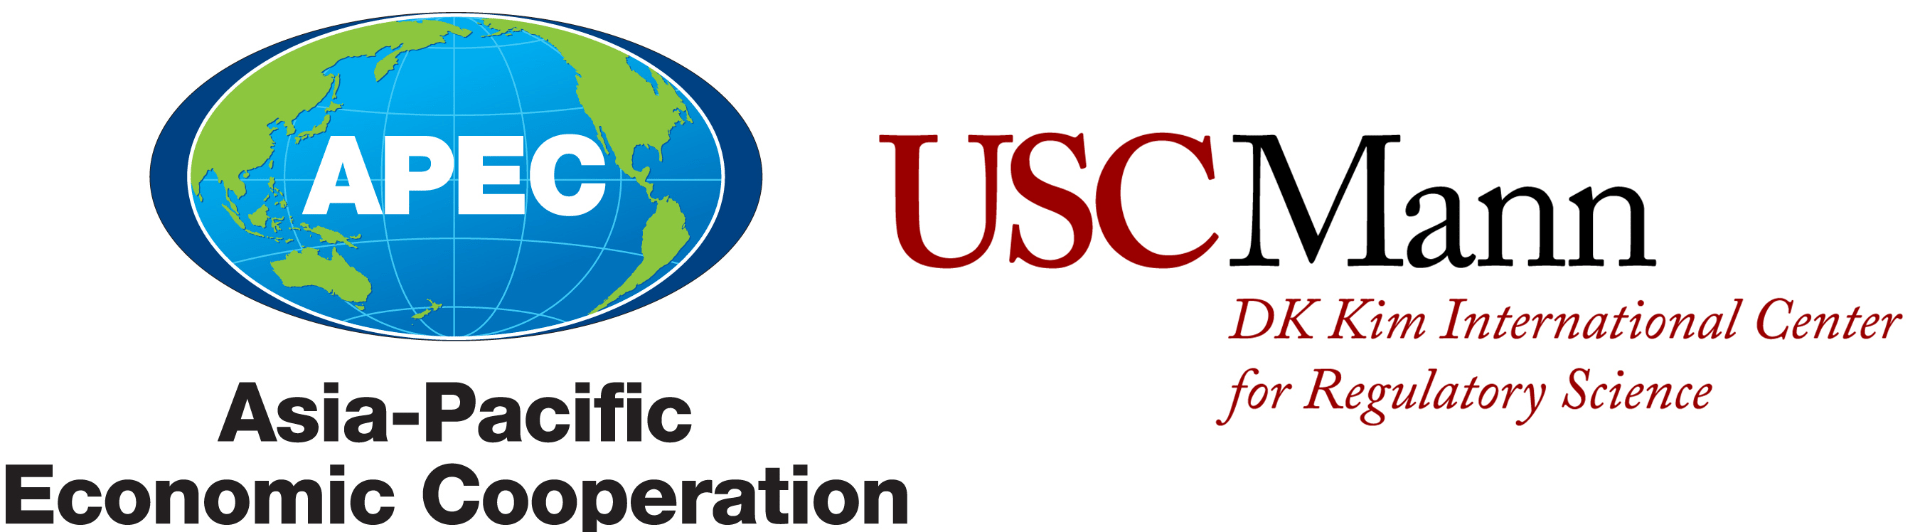 APEC-USC logos